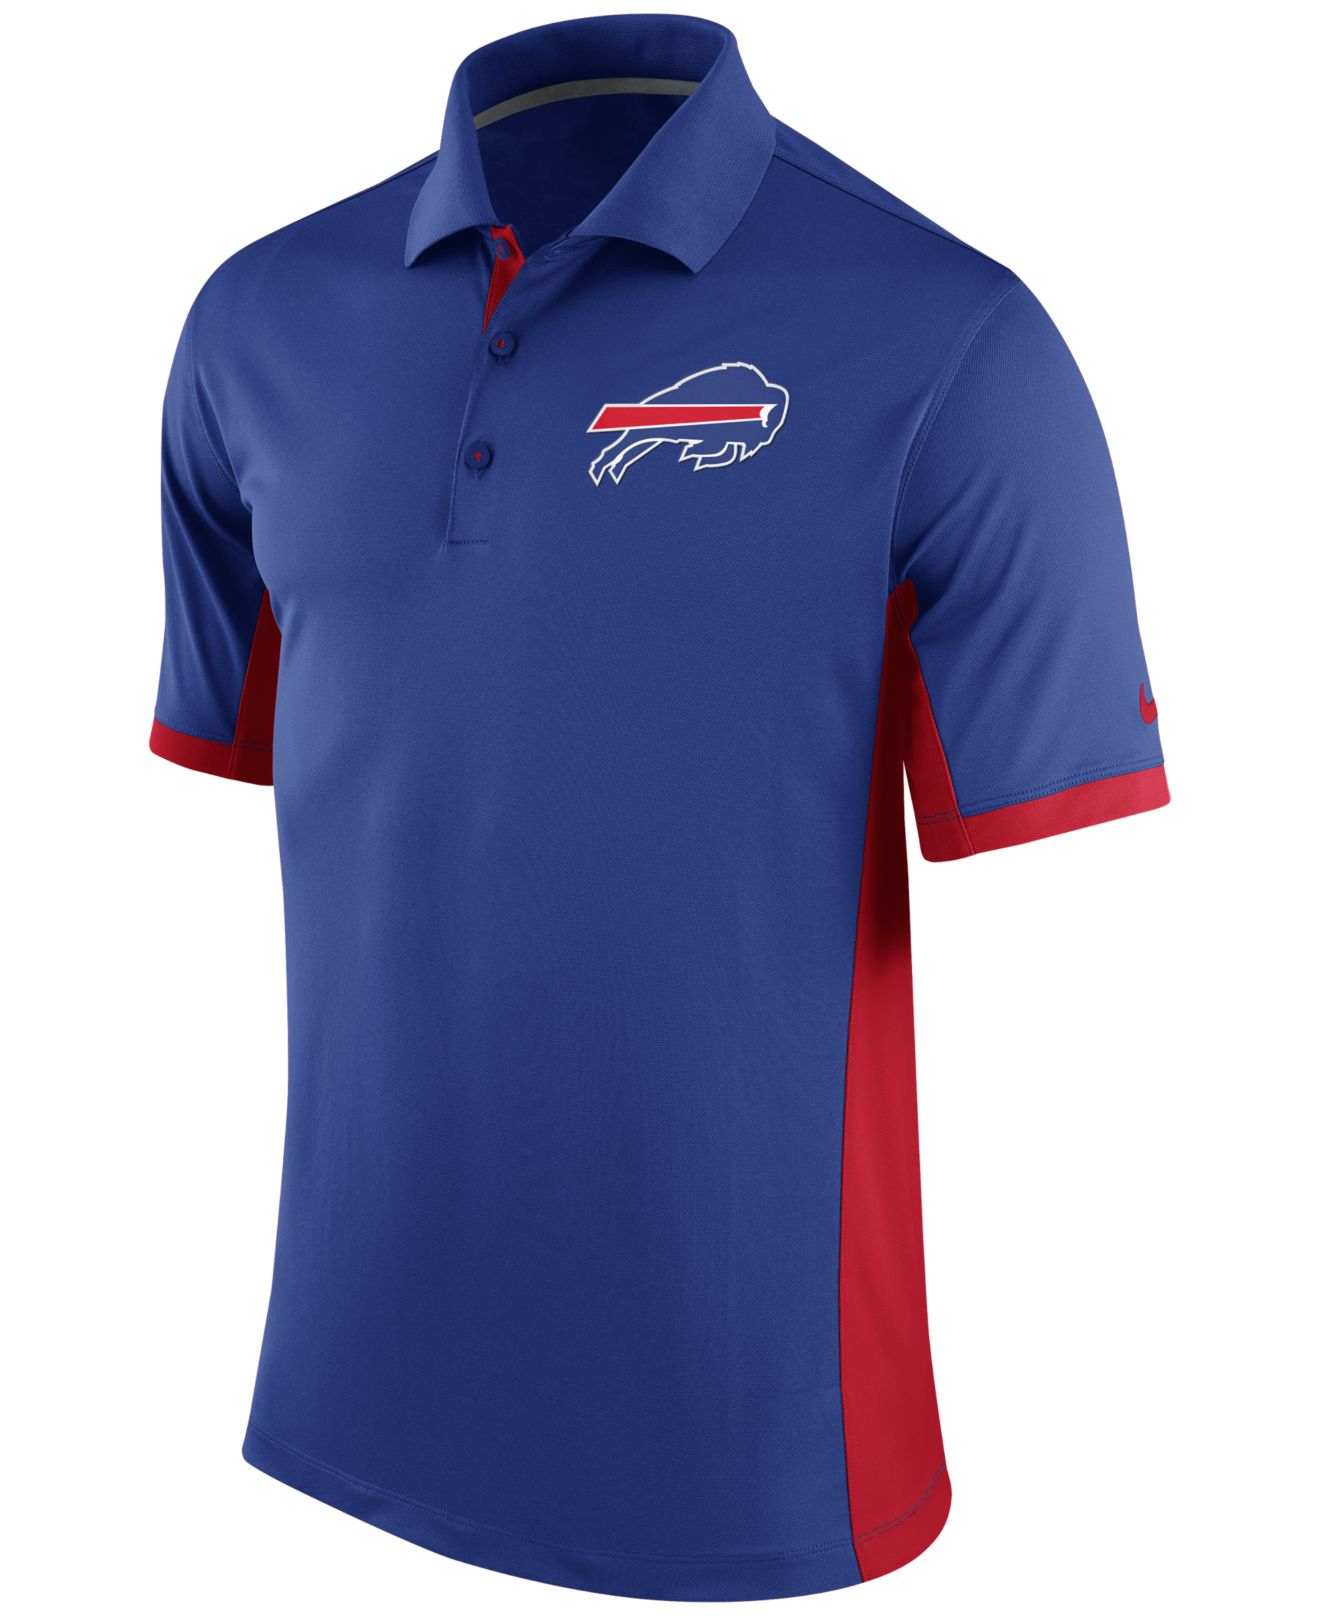 Lyst - Nike Men's Buffalo Bills Team Issue Polo in Blue for Men